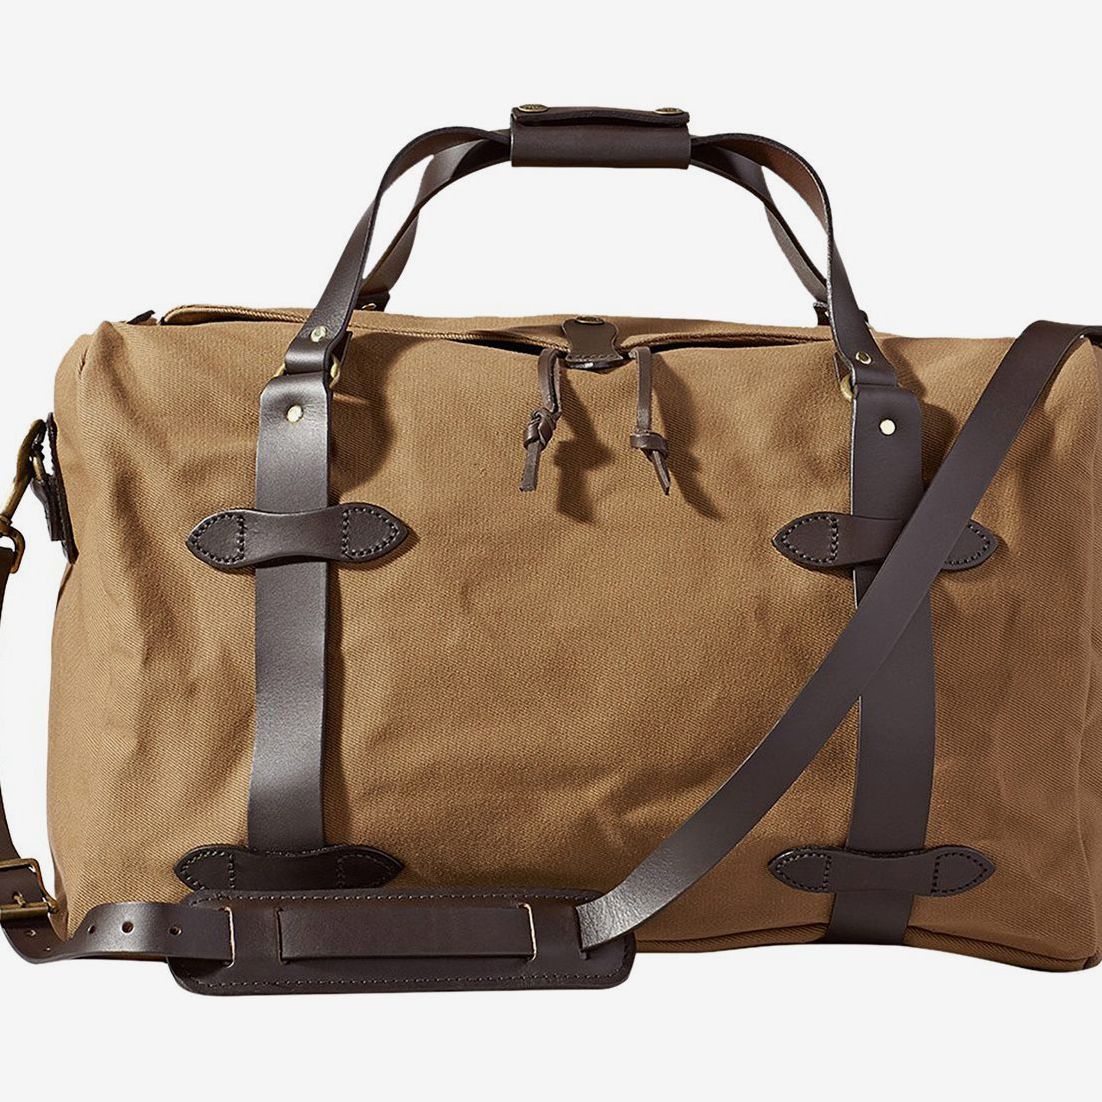 InterestPrint Carry-on Garment Bag Travel Bag Duffel Bag Weekend Bag Anchor Rope and Stripes